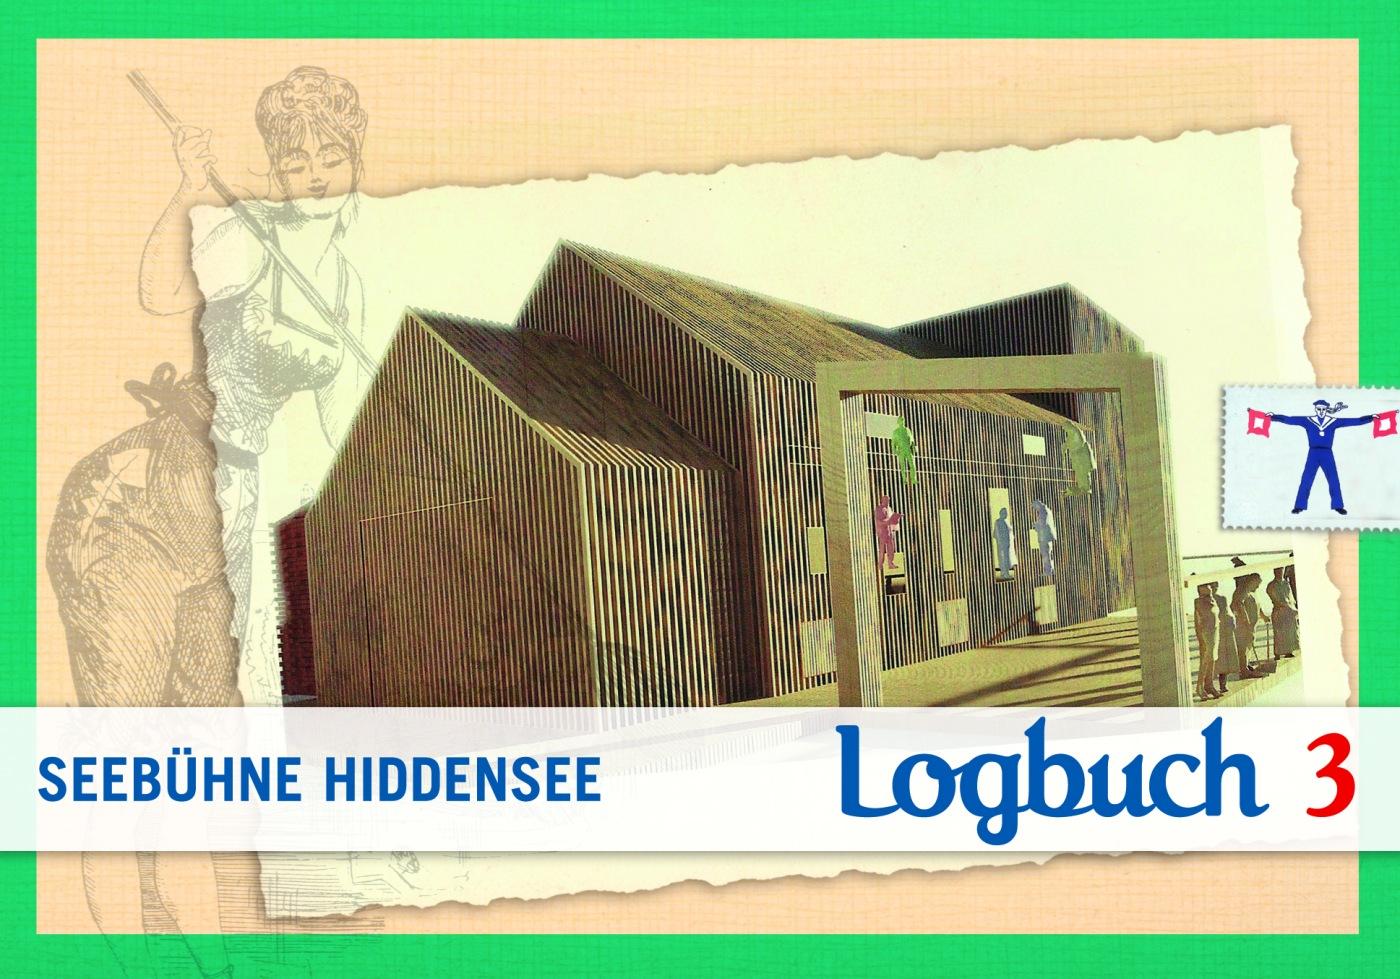 "Seebühne Hiddensee - Logbuch 3"